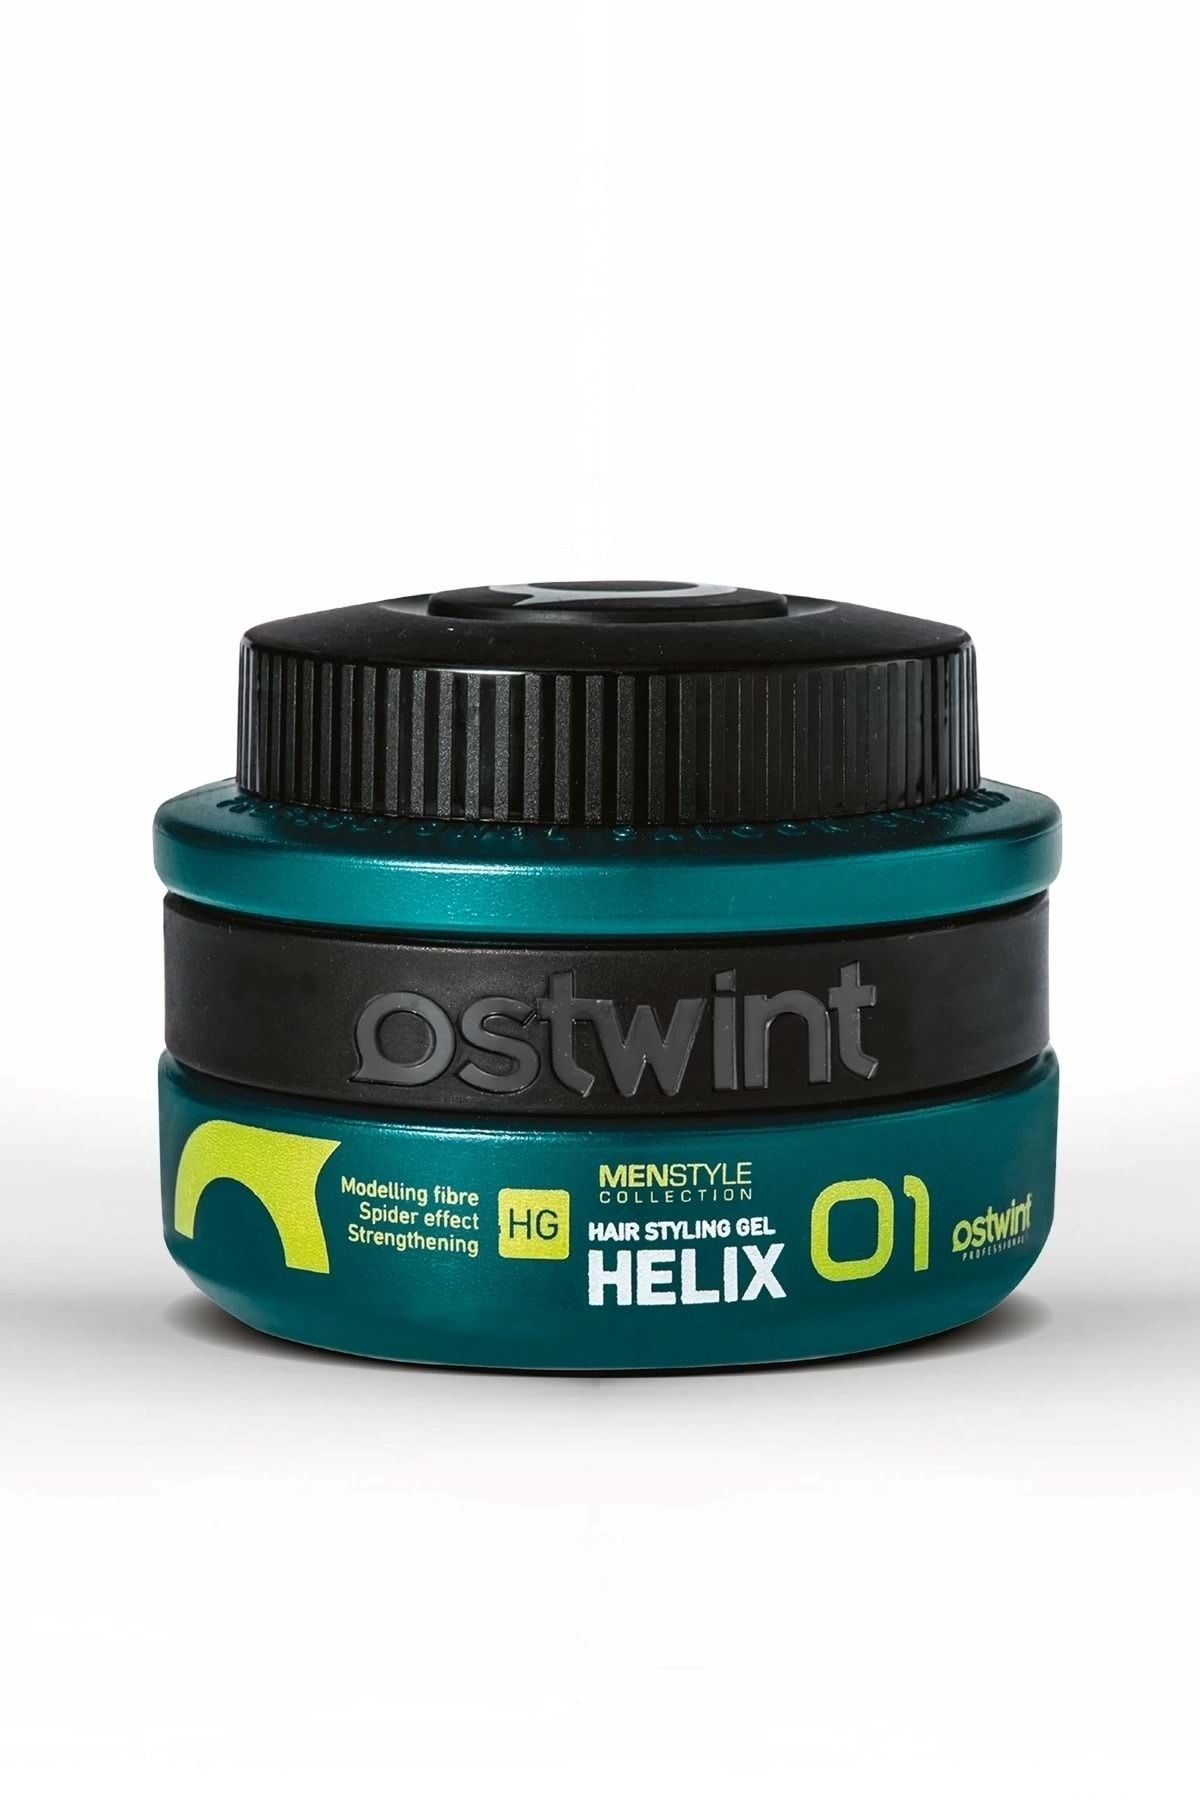 Ostwint Menstyle Collection Saç Jölesi Helix Maximum Hold No:01 750 ml